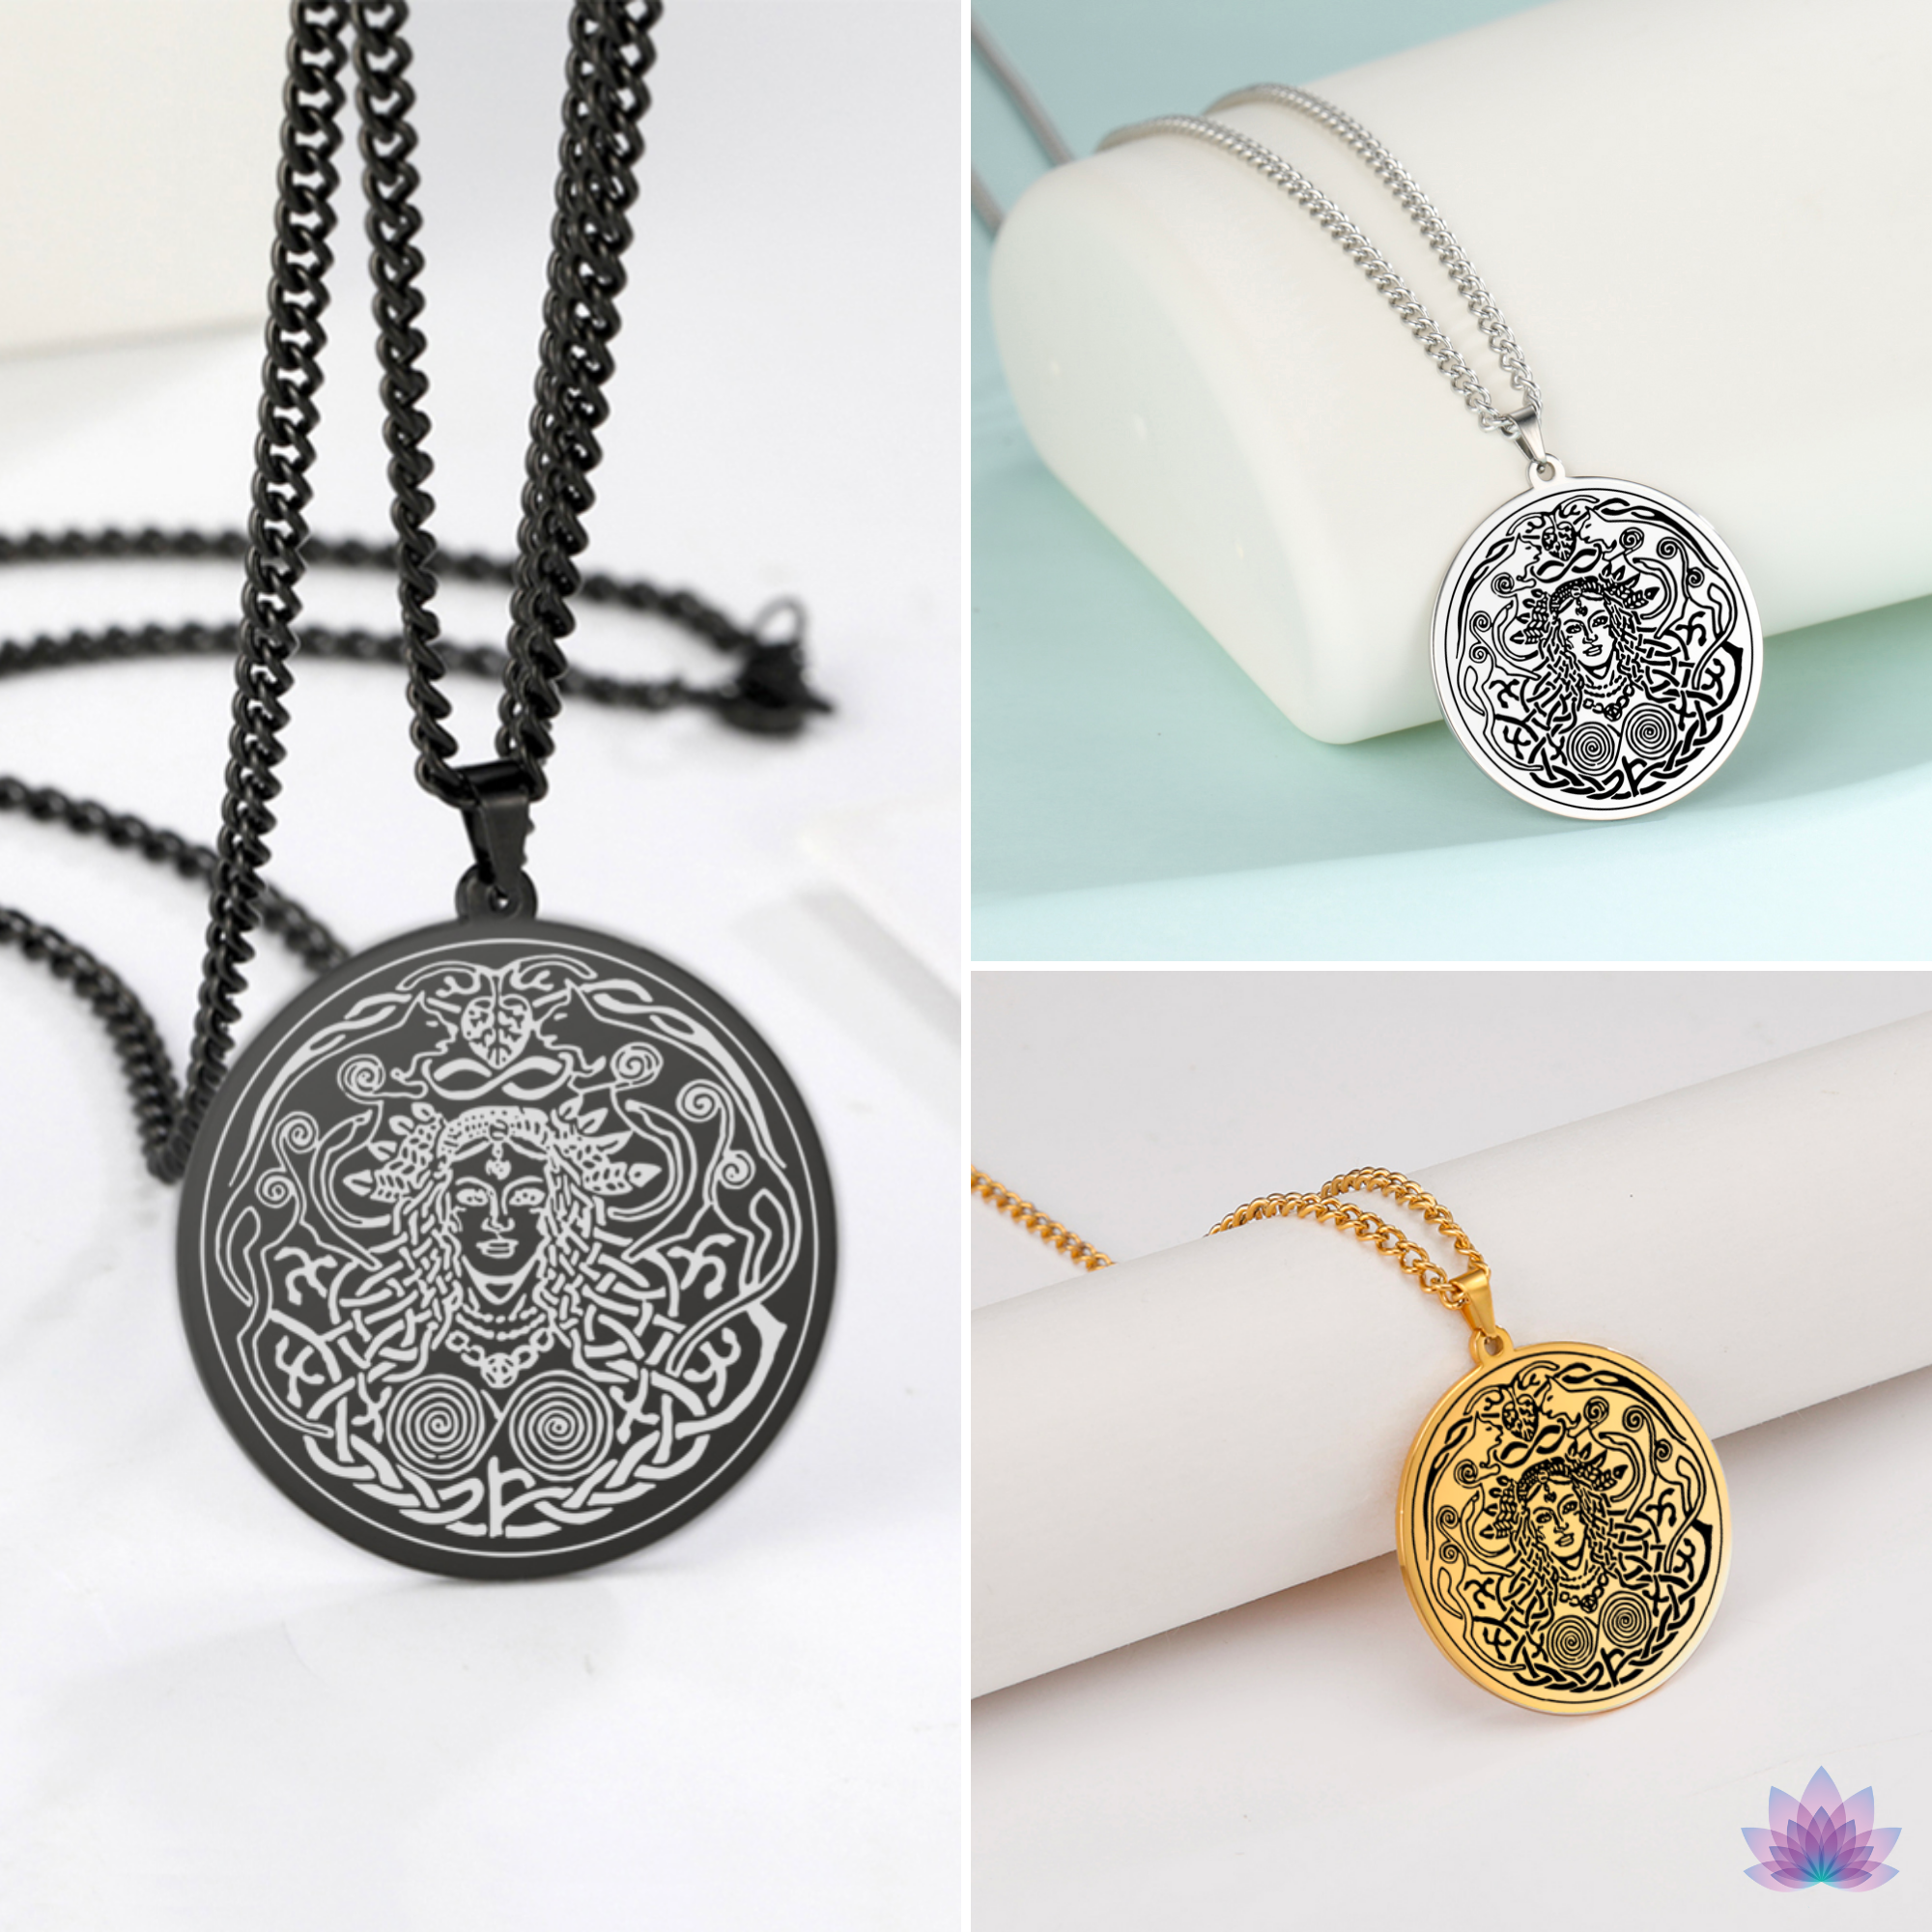 Norse Mythology Necklace | Freyja Goddess Pendant | Love Beauty Fertility Amulet | Pagan Worship Witchy Jewelry | Apollo Tarot Shop